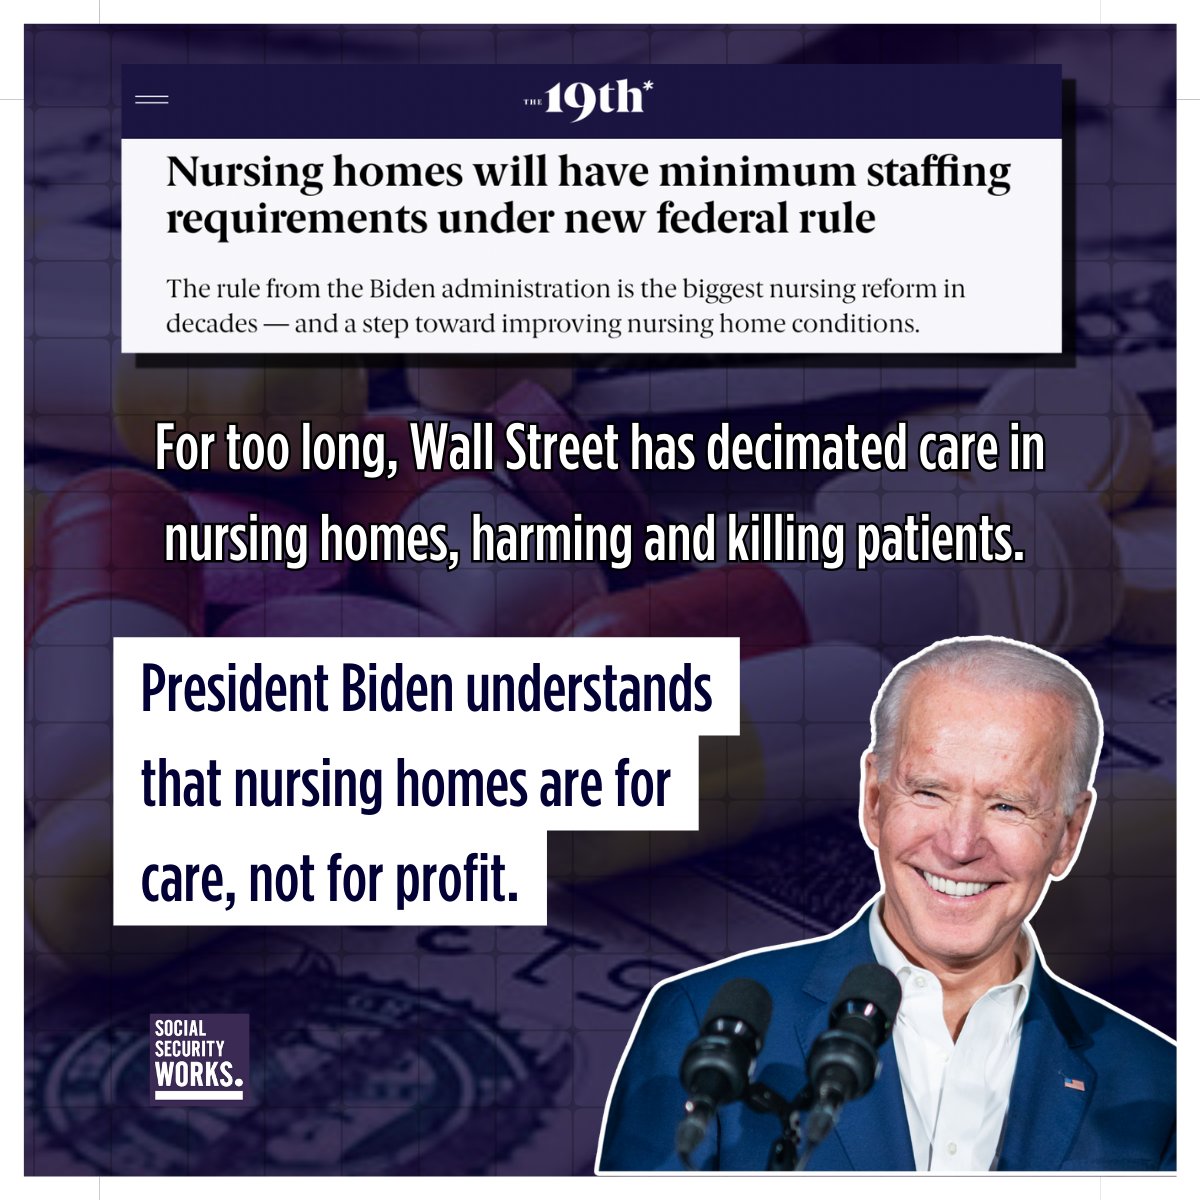 Nursing homes are for care, not for profit. Thank you, President @JoeBiden, for standing up for seniors!